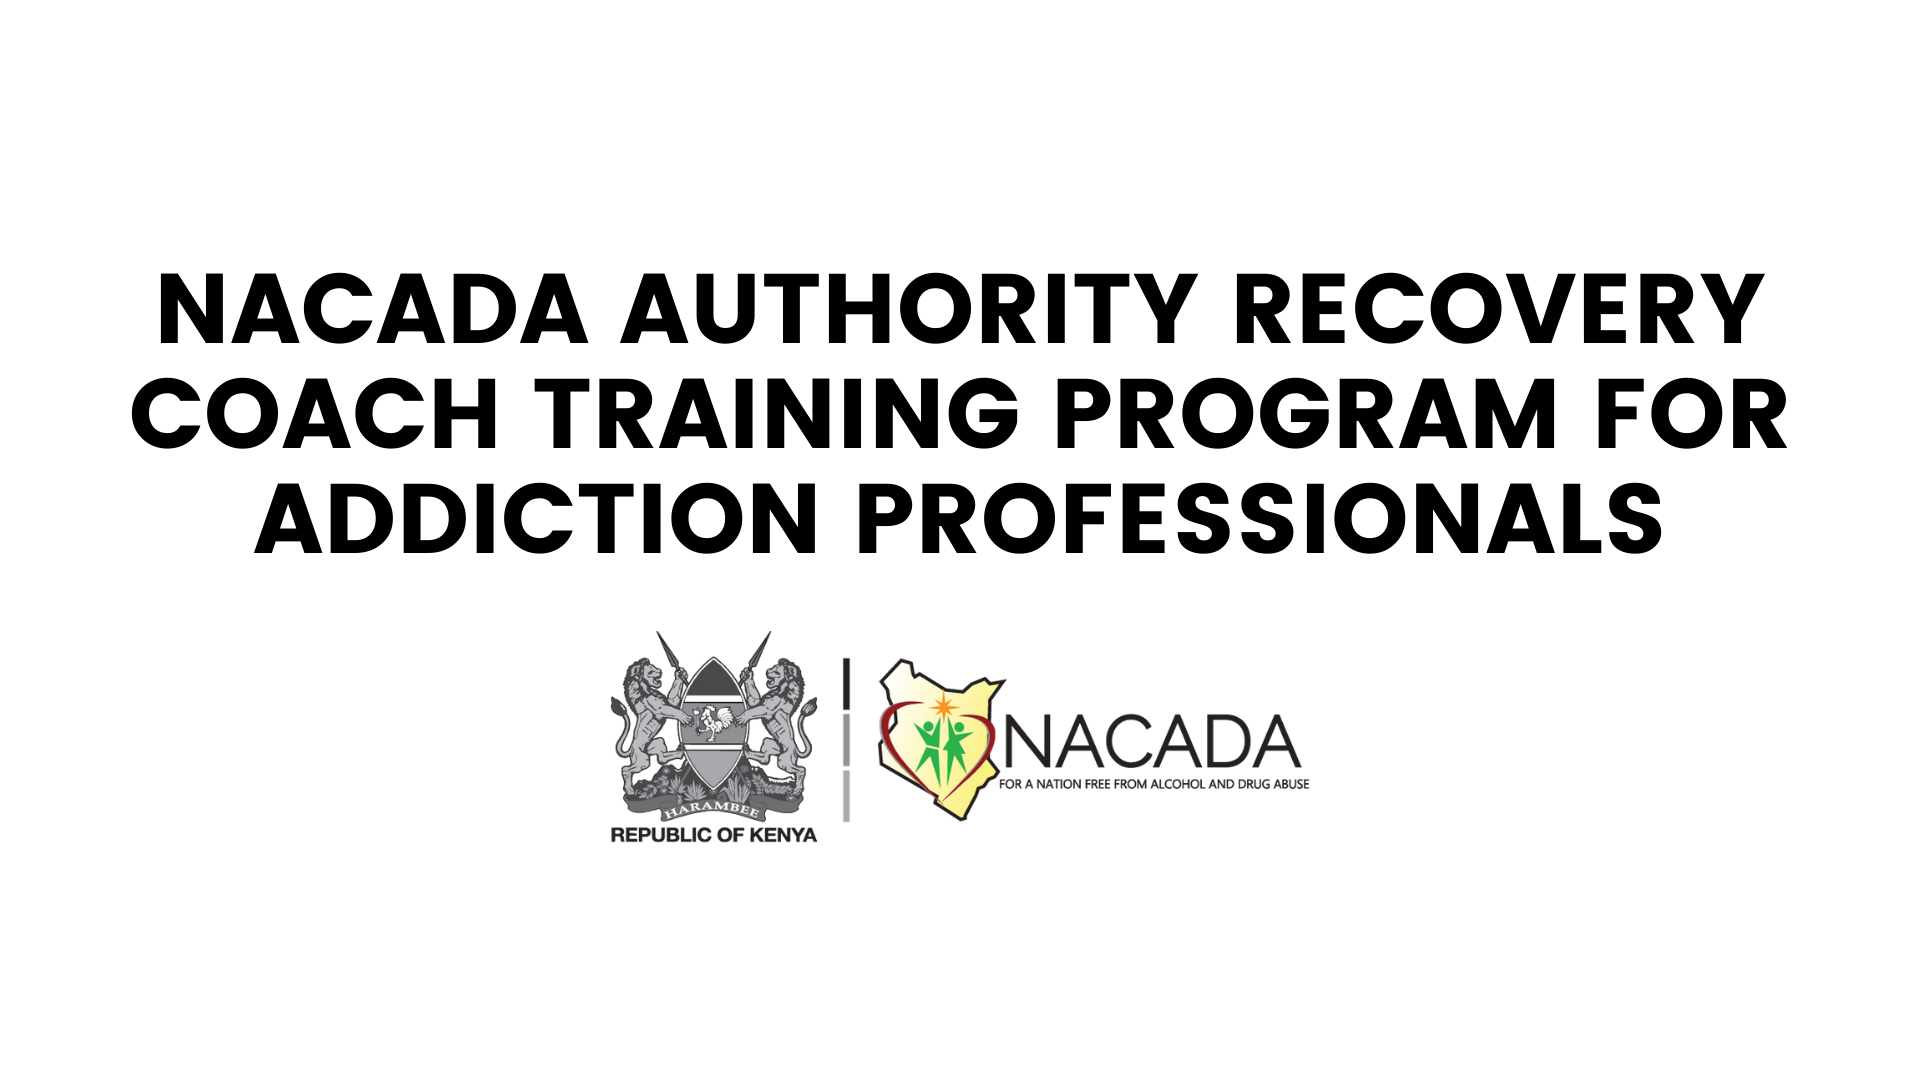 NACADA AUTHORITY RECOVERY COACH TRAINING PROGRAM FOR ADDICTION PROFESSIONALS